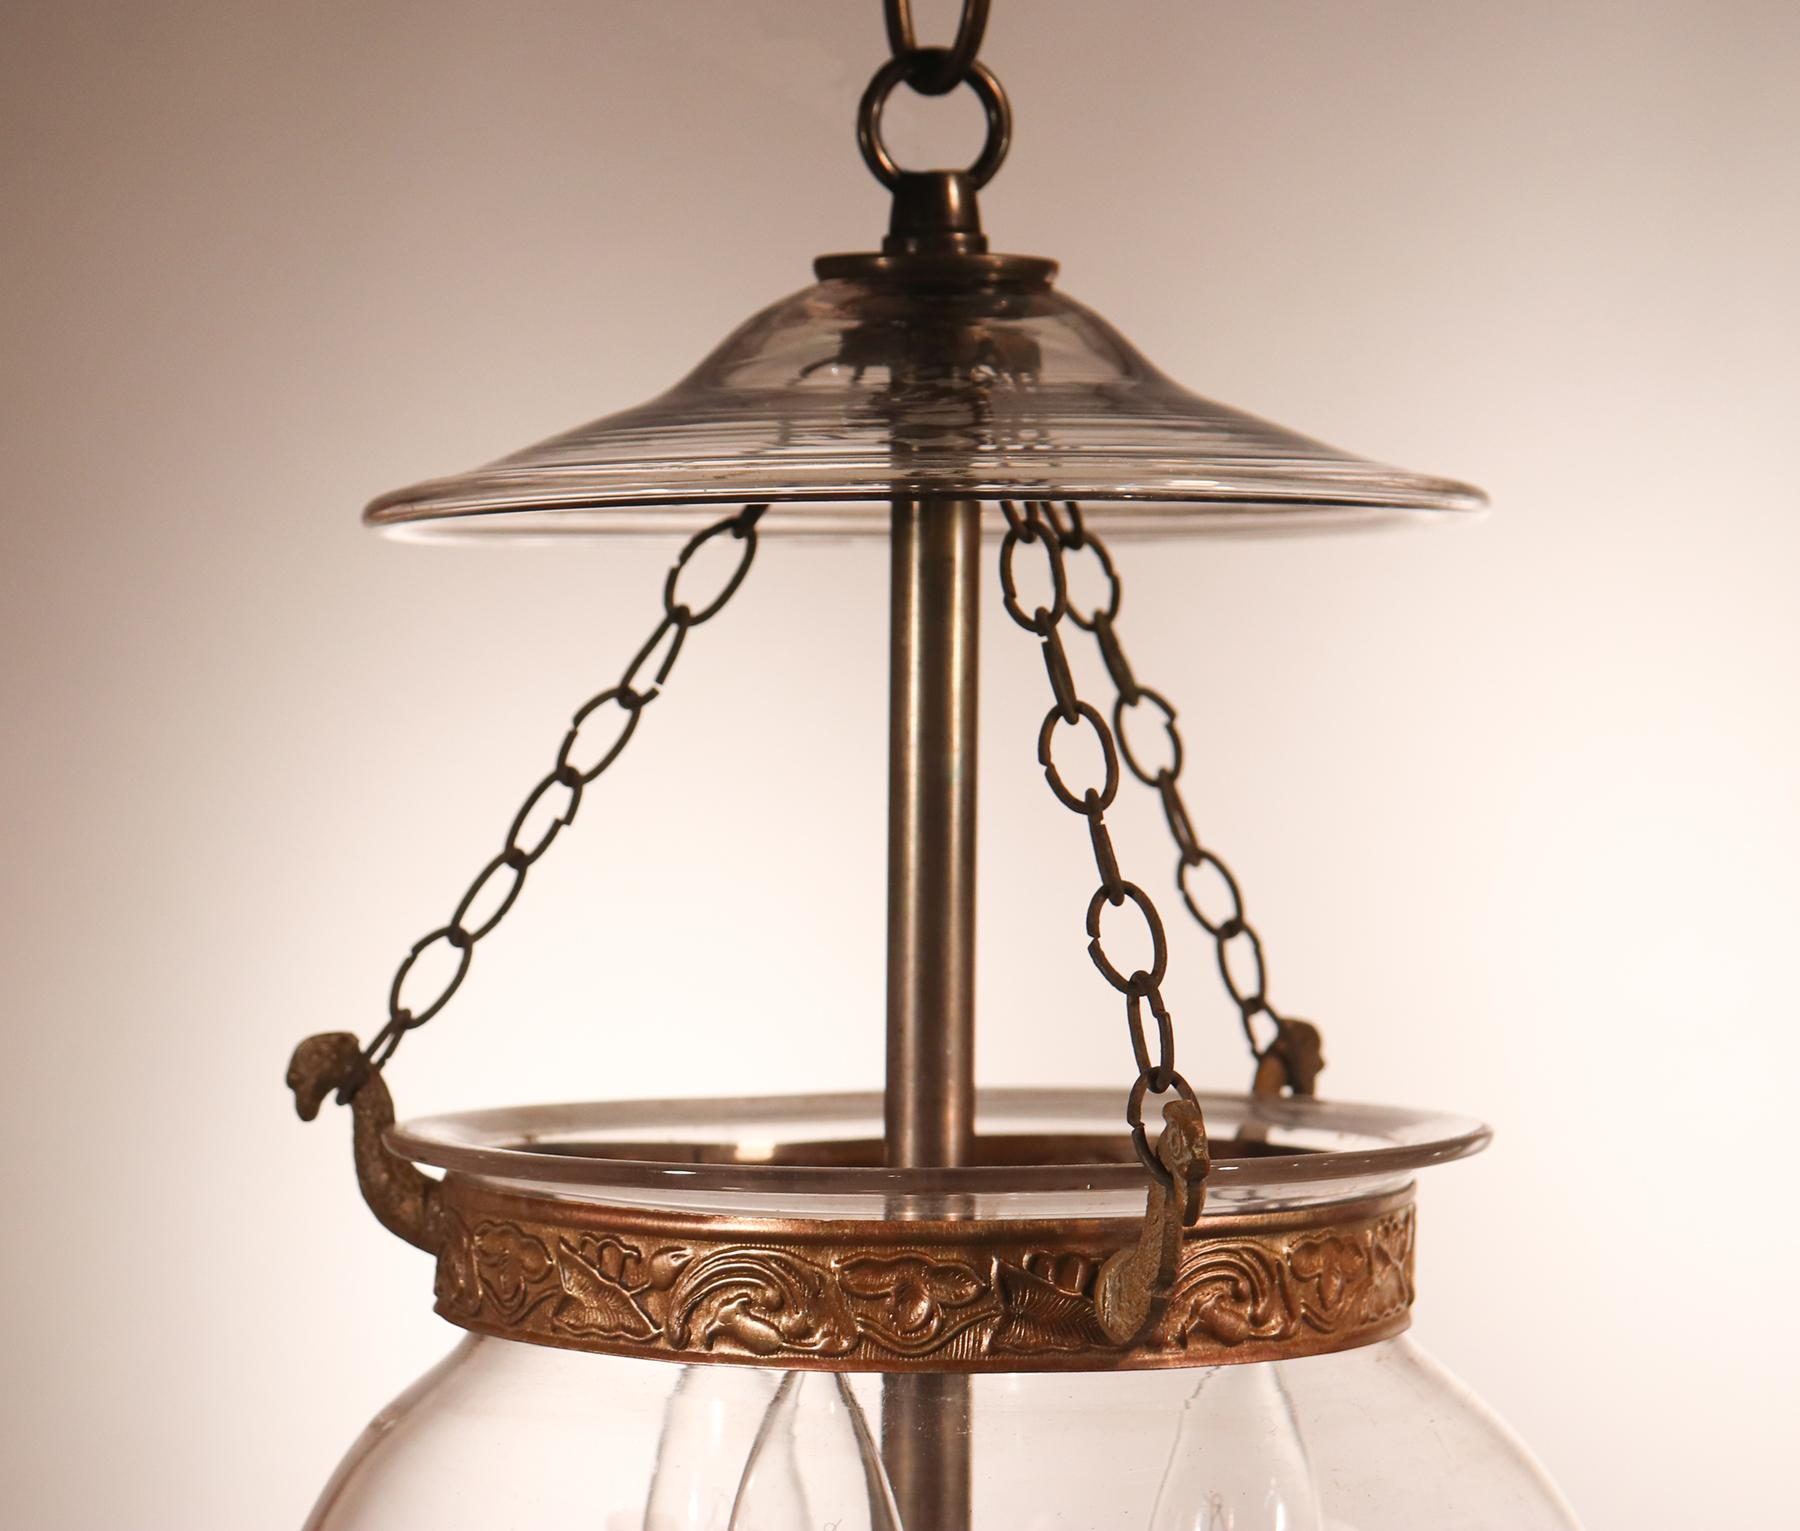 Set of Antique Globe Bell Jar Lanterns with Vine Etching 2